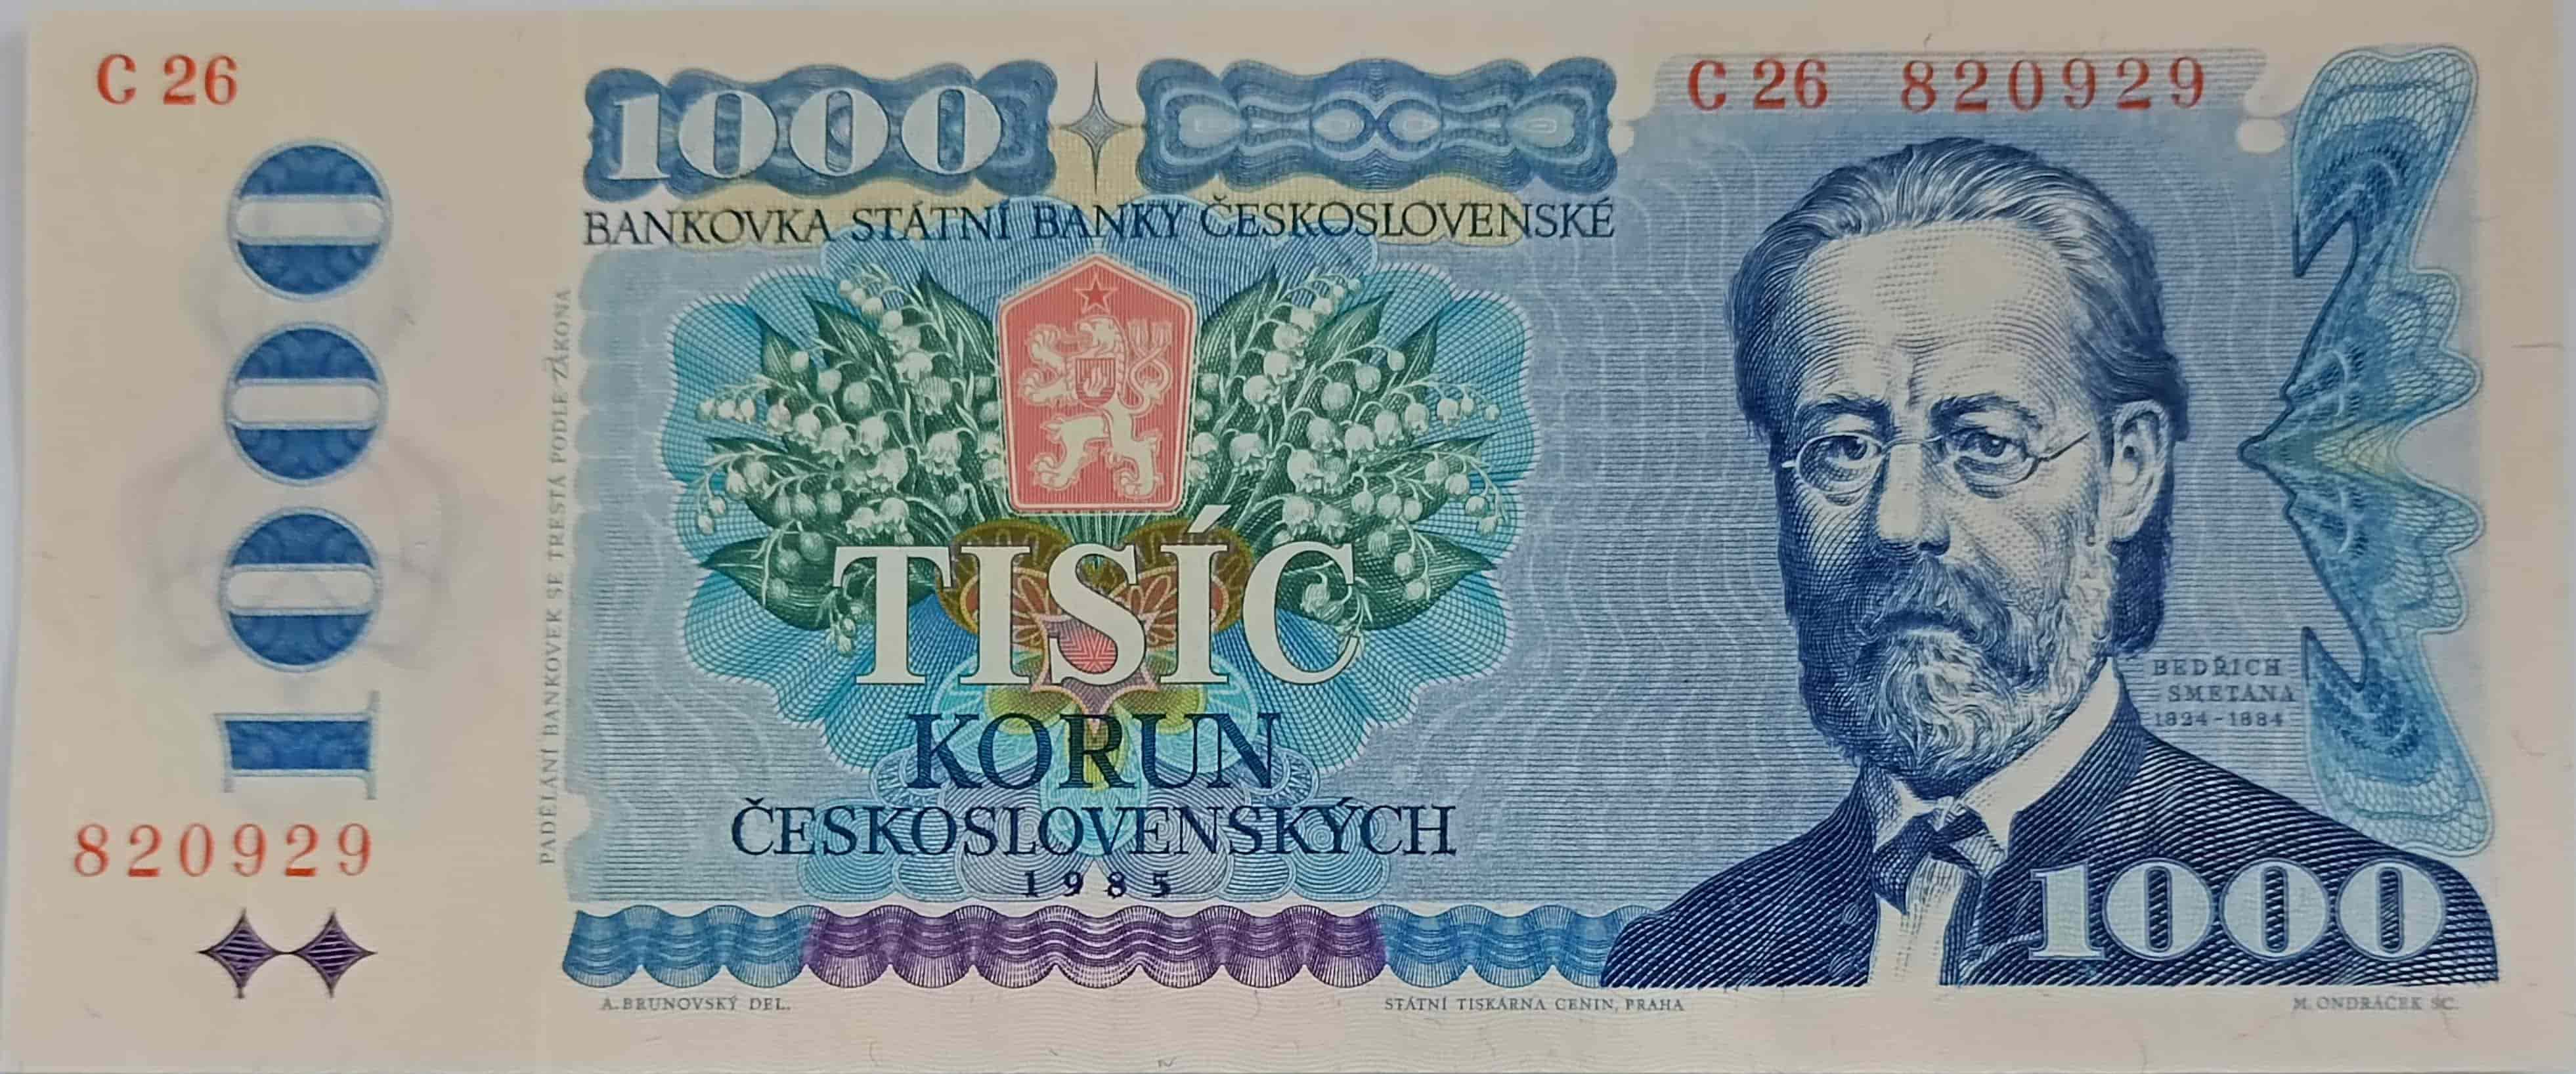 1000 Kčs 1985 C26